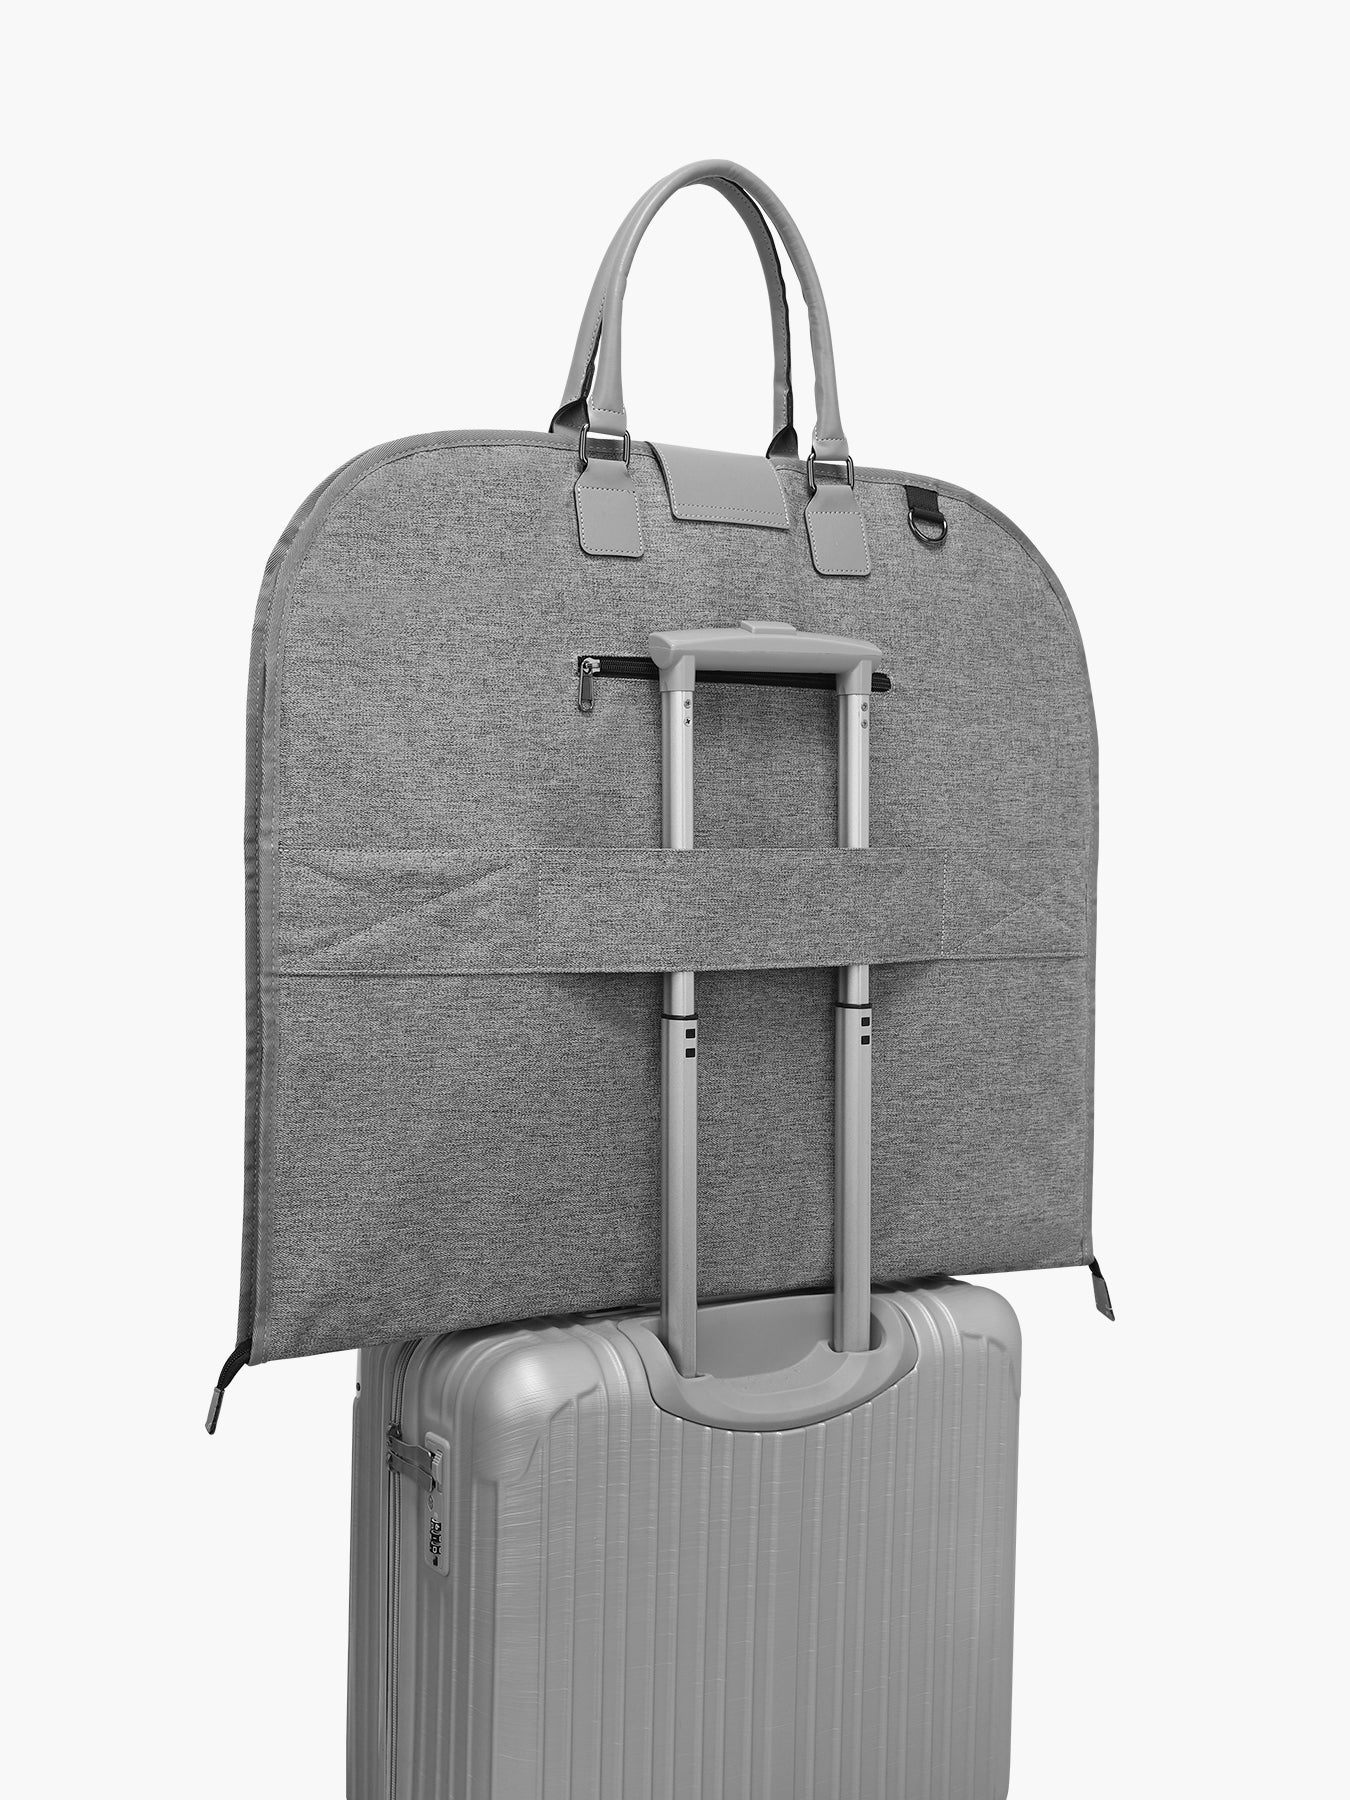 Garment Bag Travel Suit Bag for Women Carry on